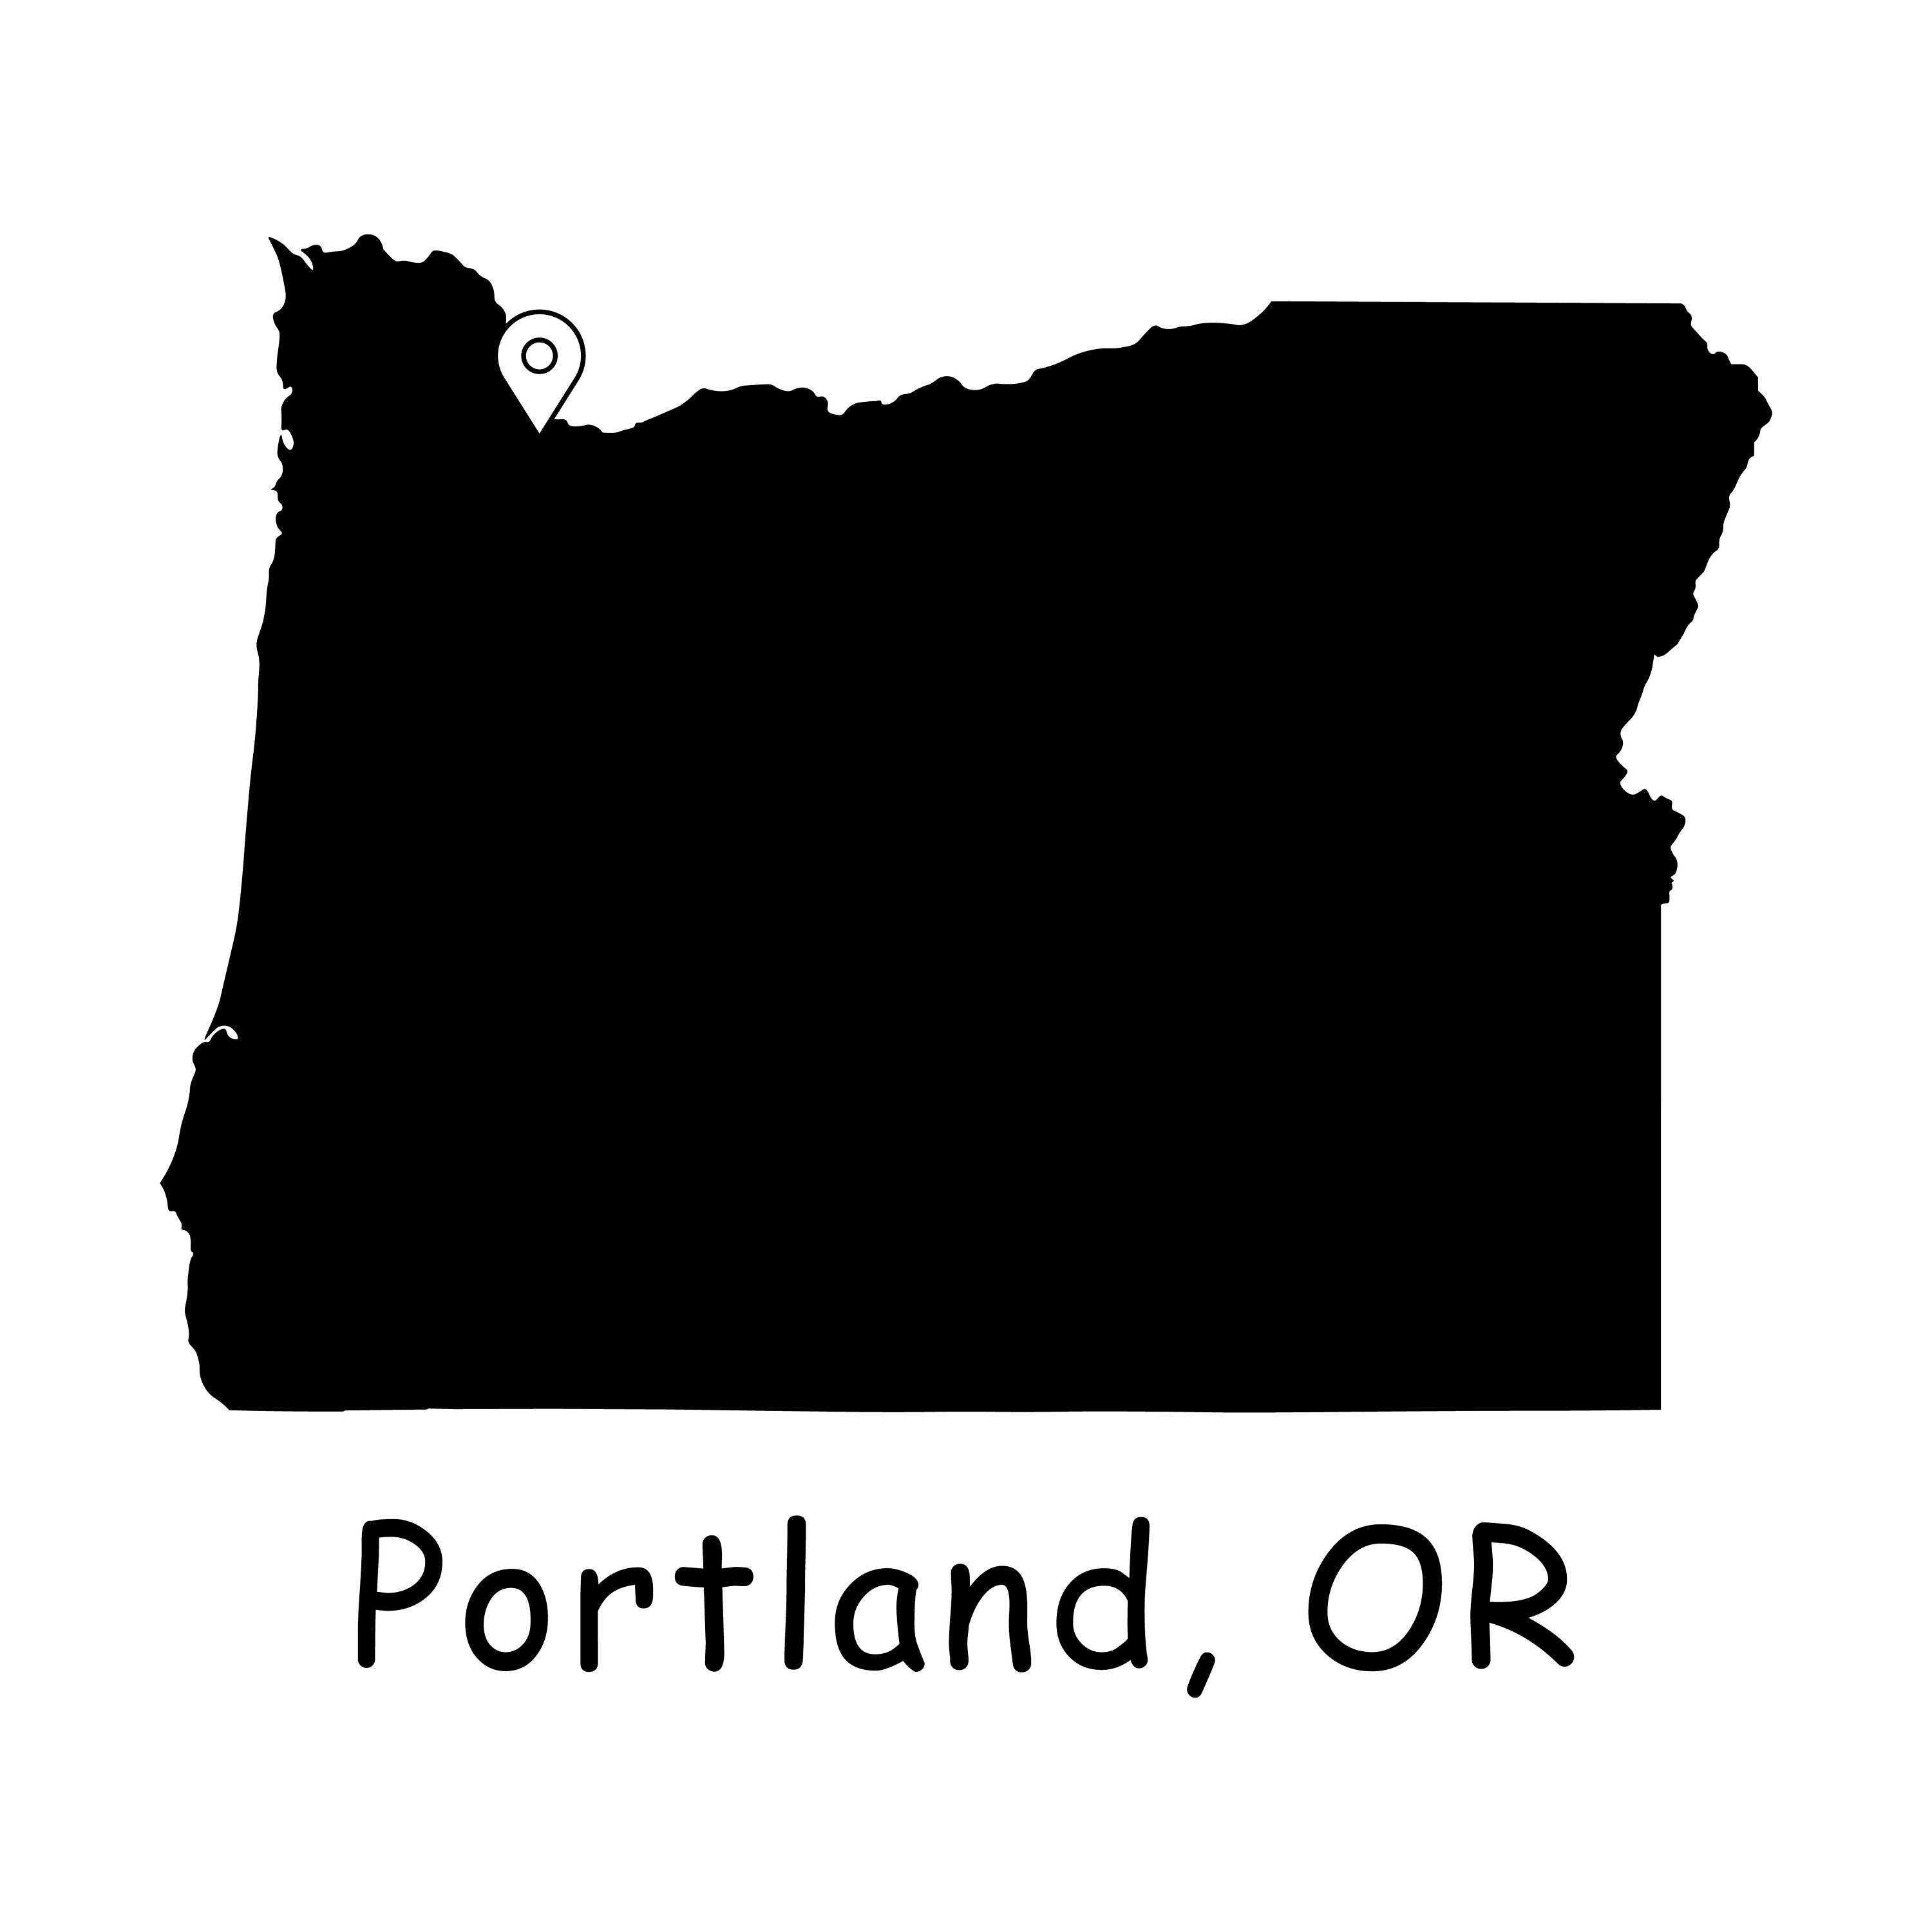 Portland sur oregon carte de lÉtat Portland OU Oregon USA -  France